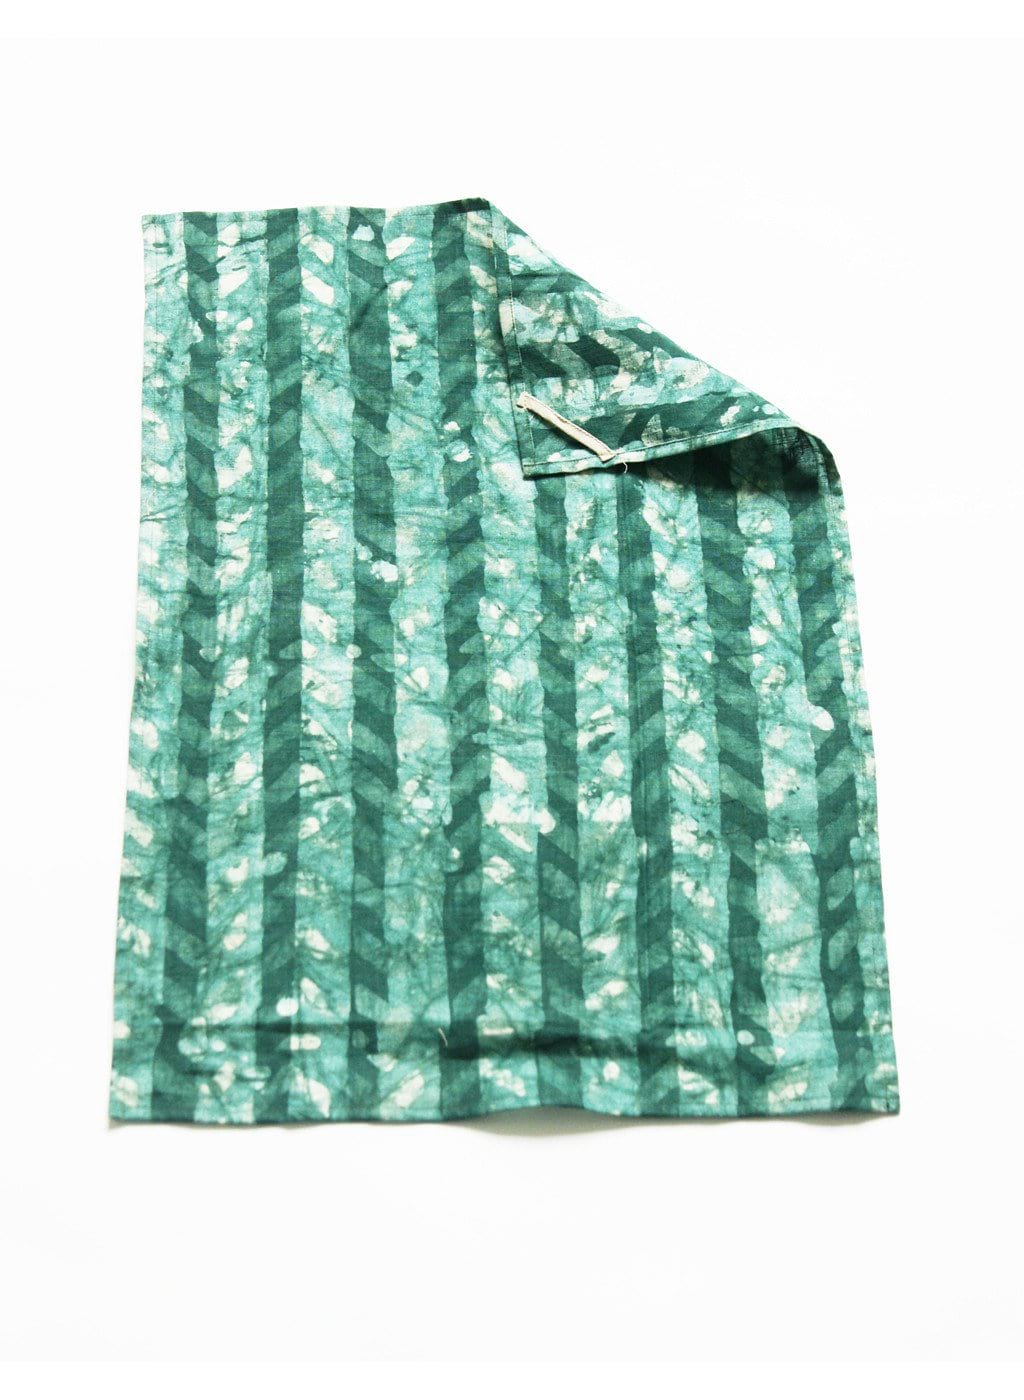 SOLD OUT: Emerald Green Chevron Linen Kitchen Tea Towel Handprinted Batik